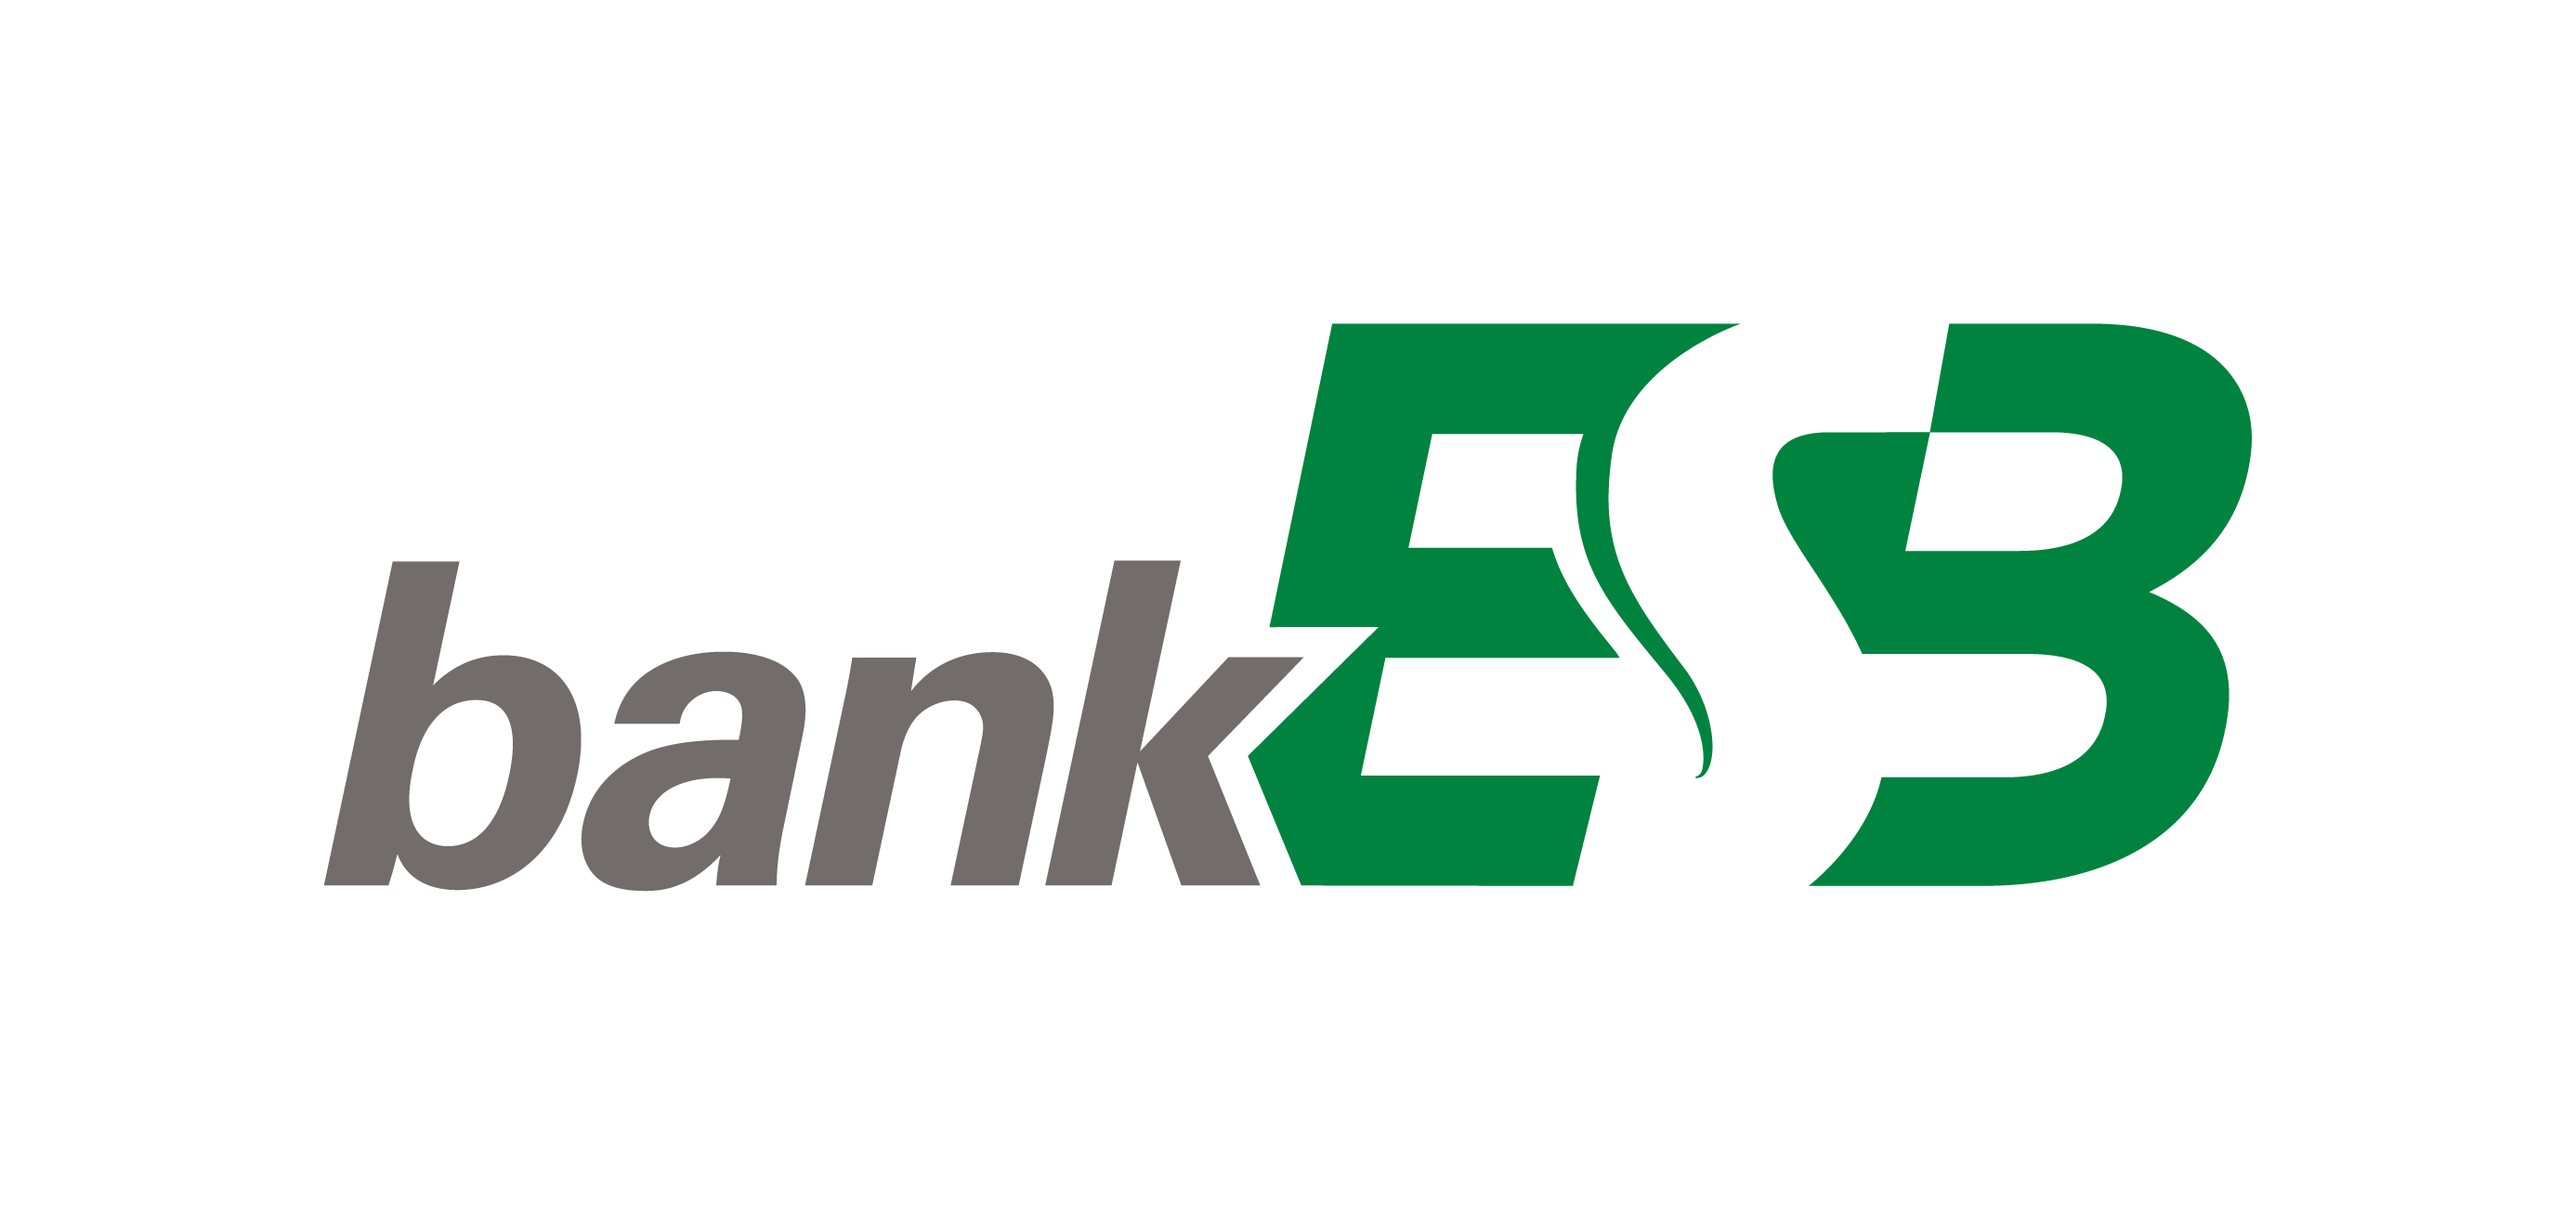 Bank ESB